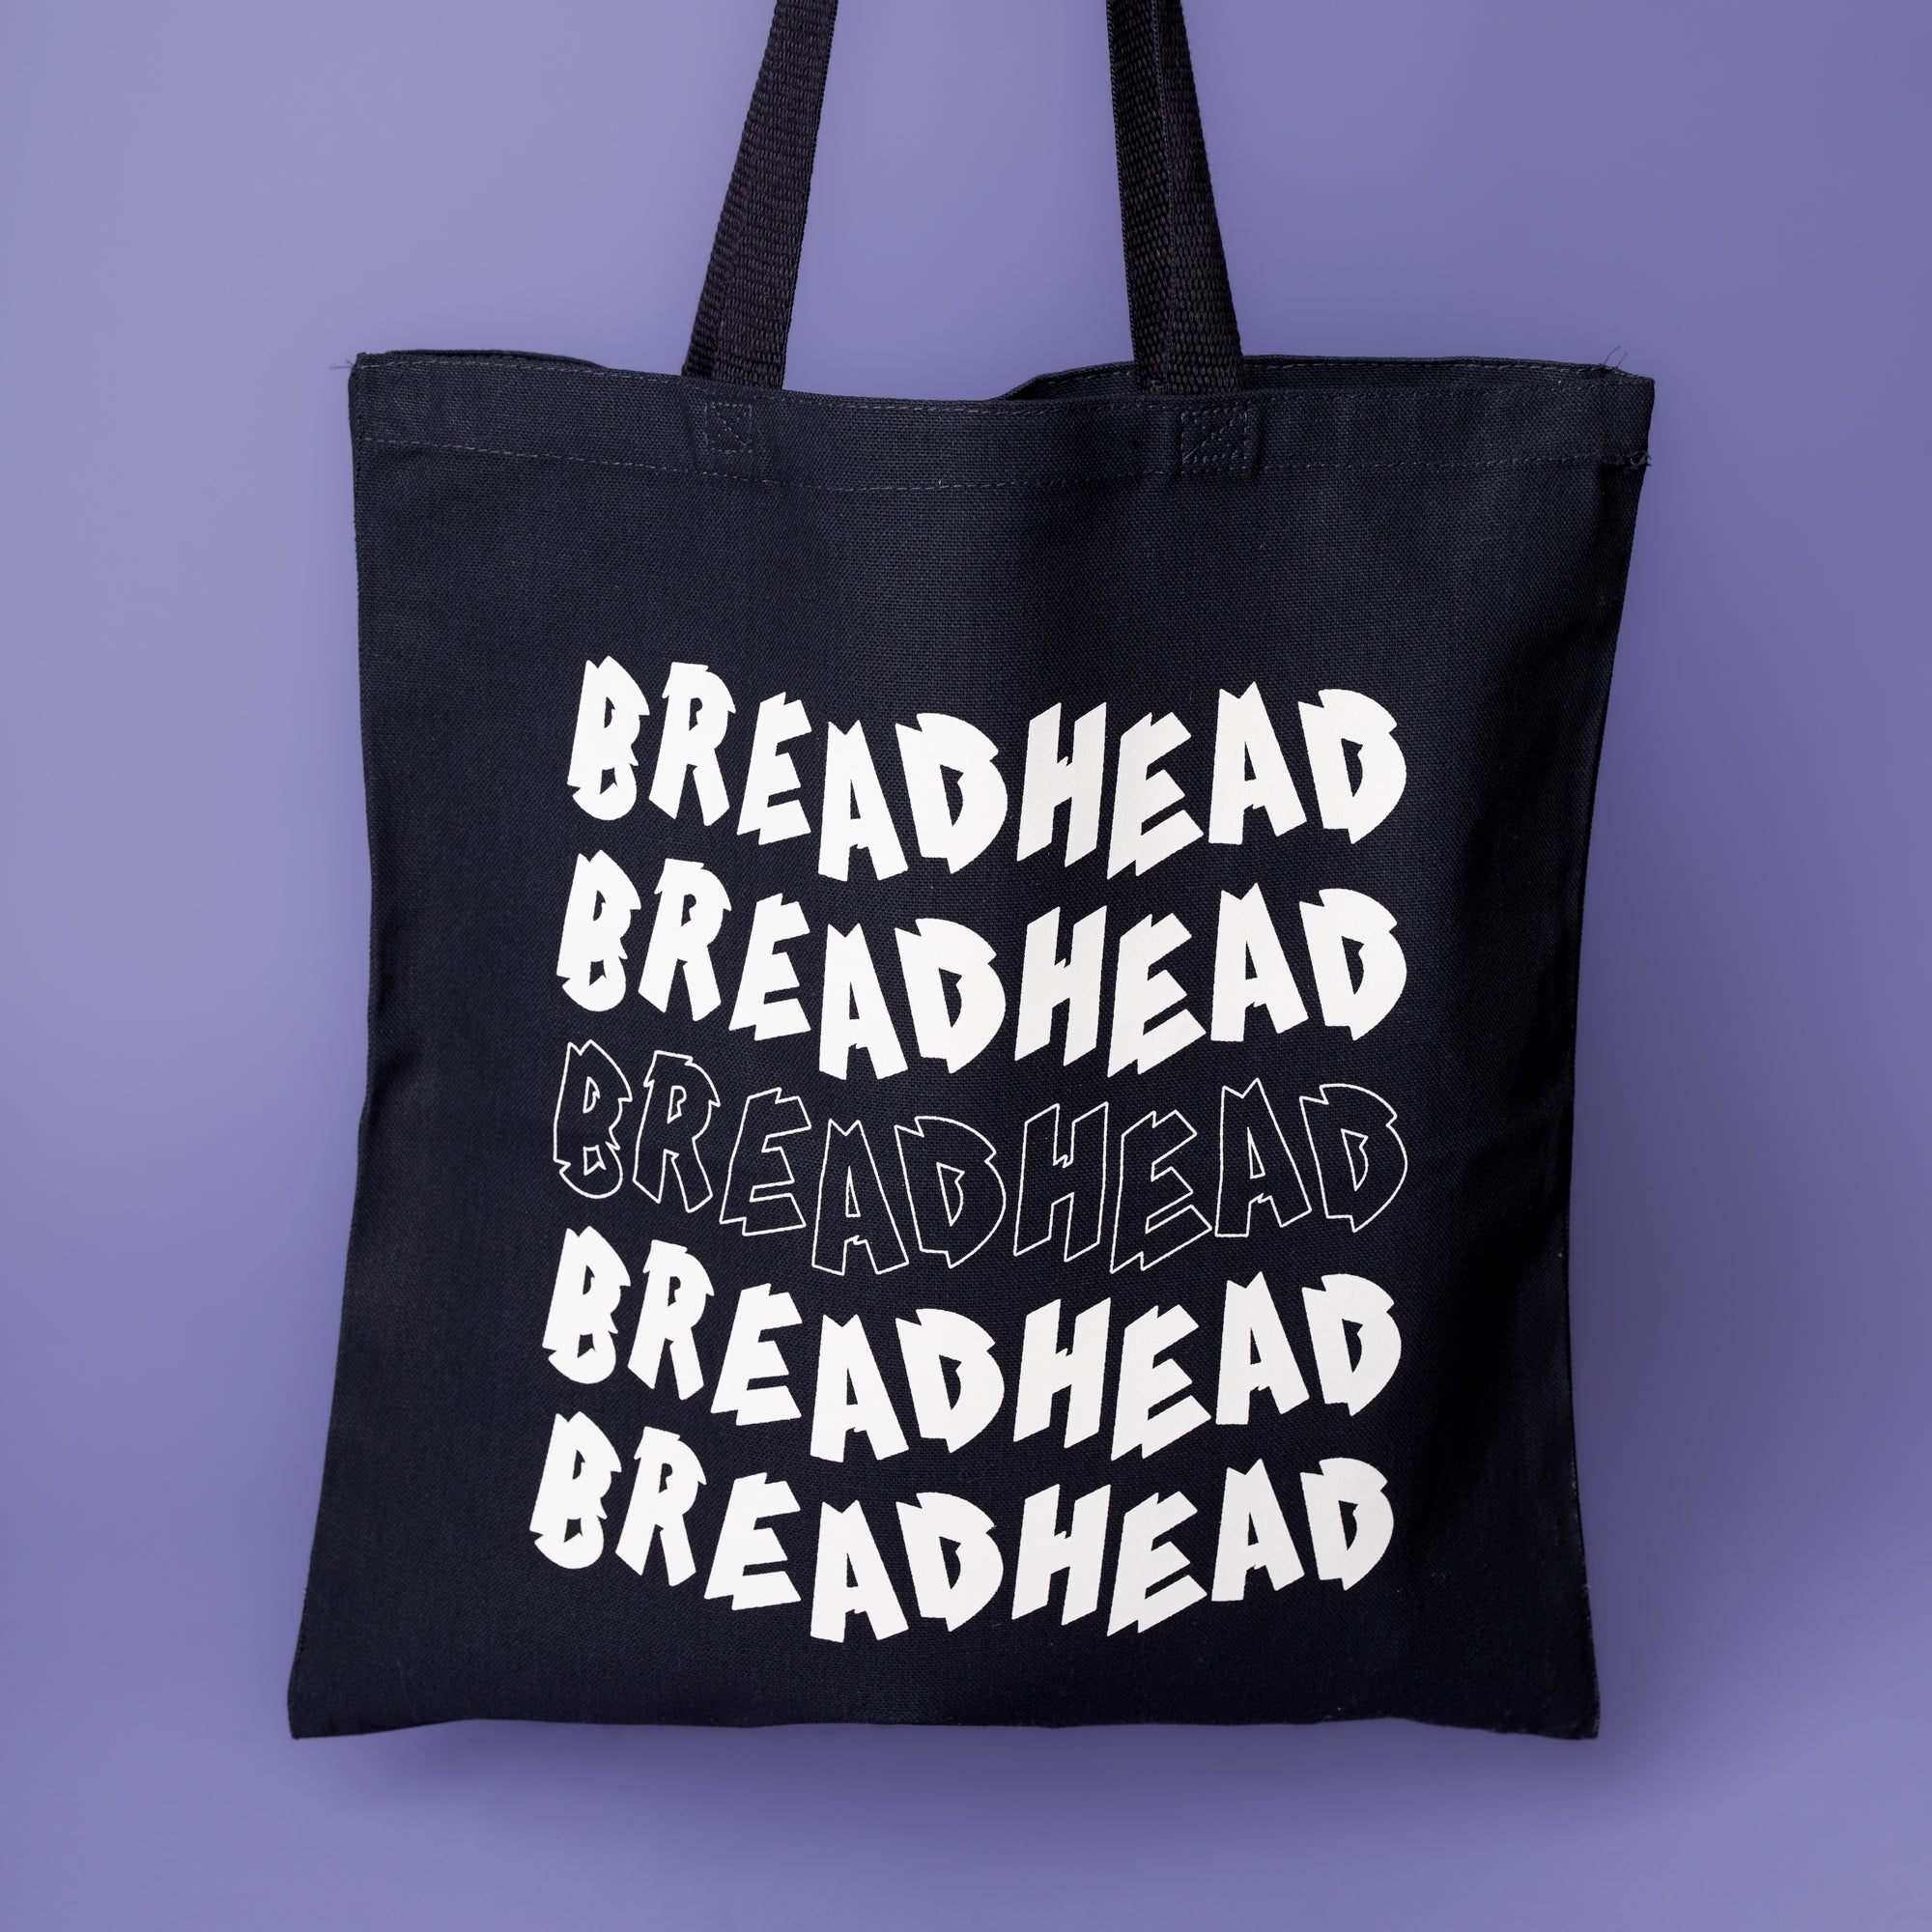 Breadhead Tote